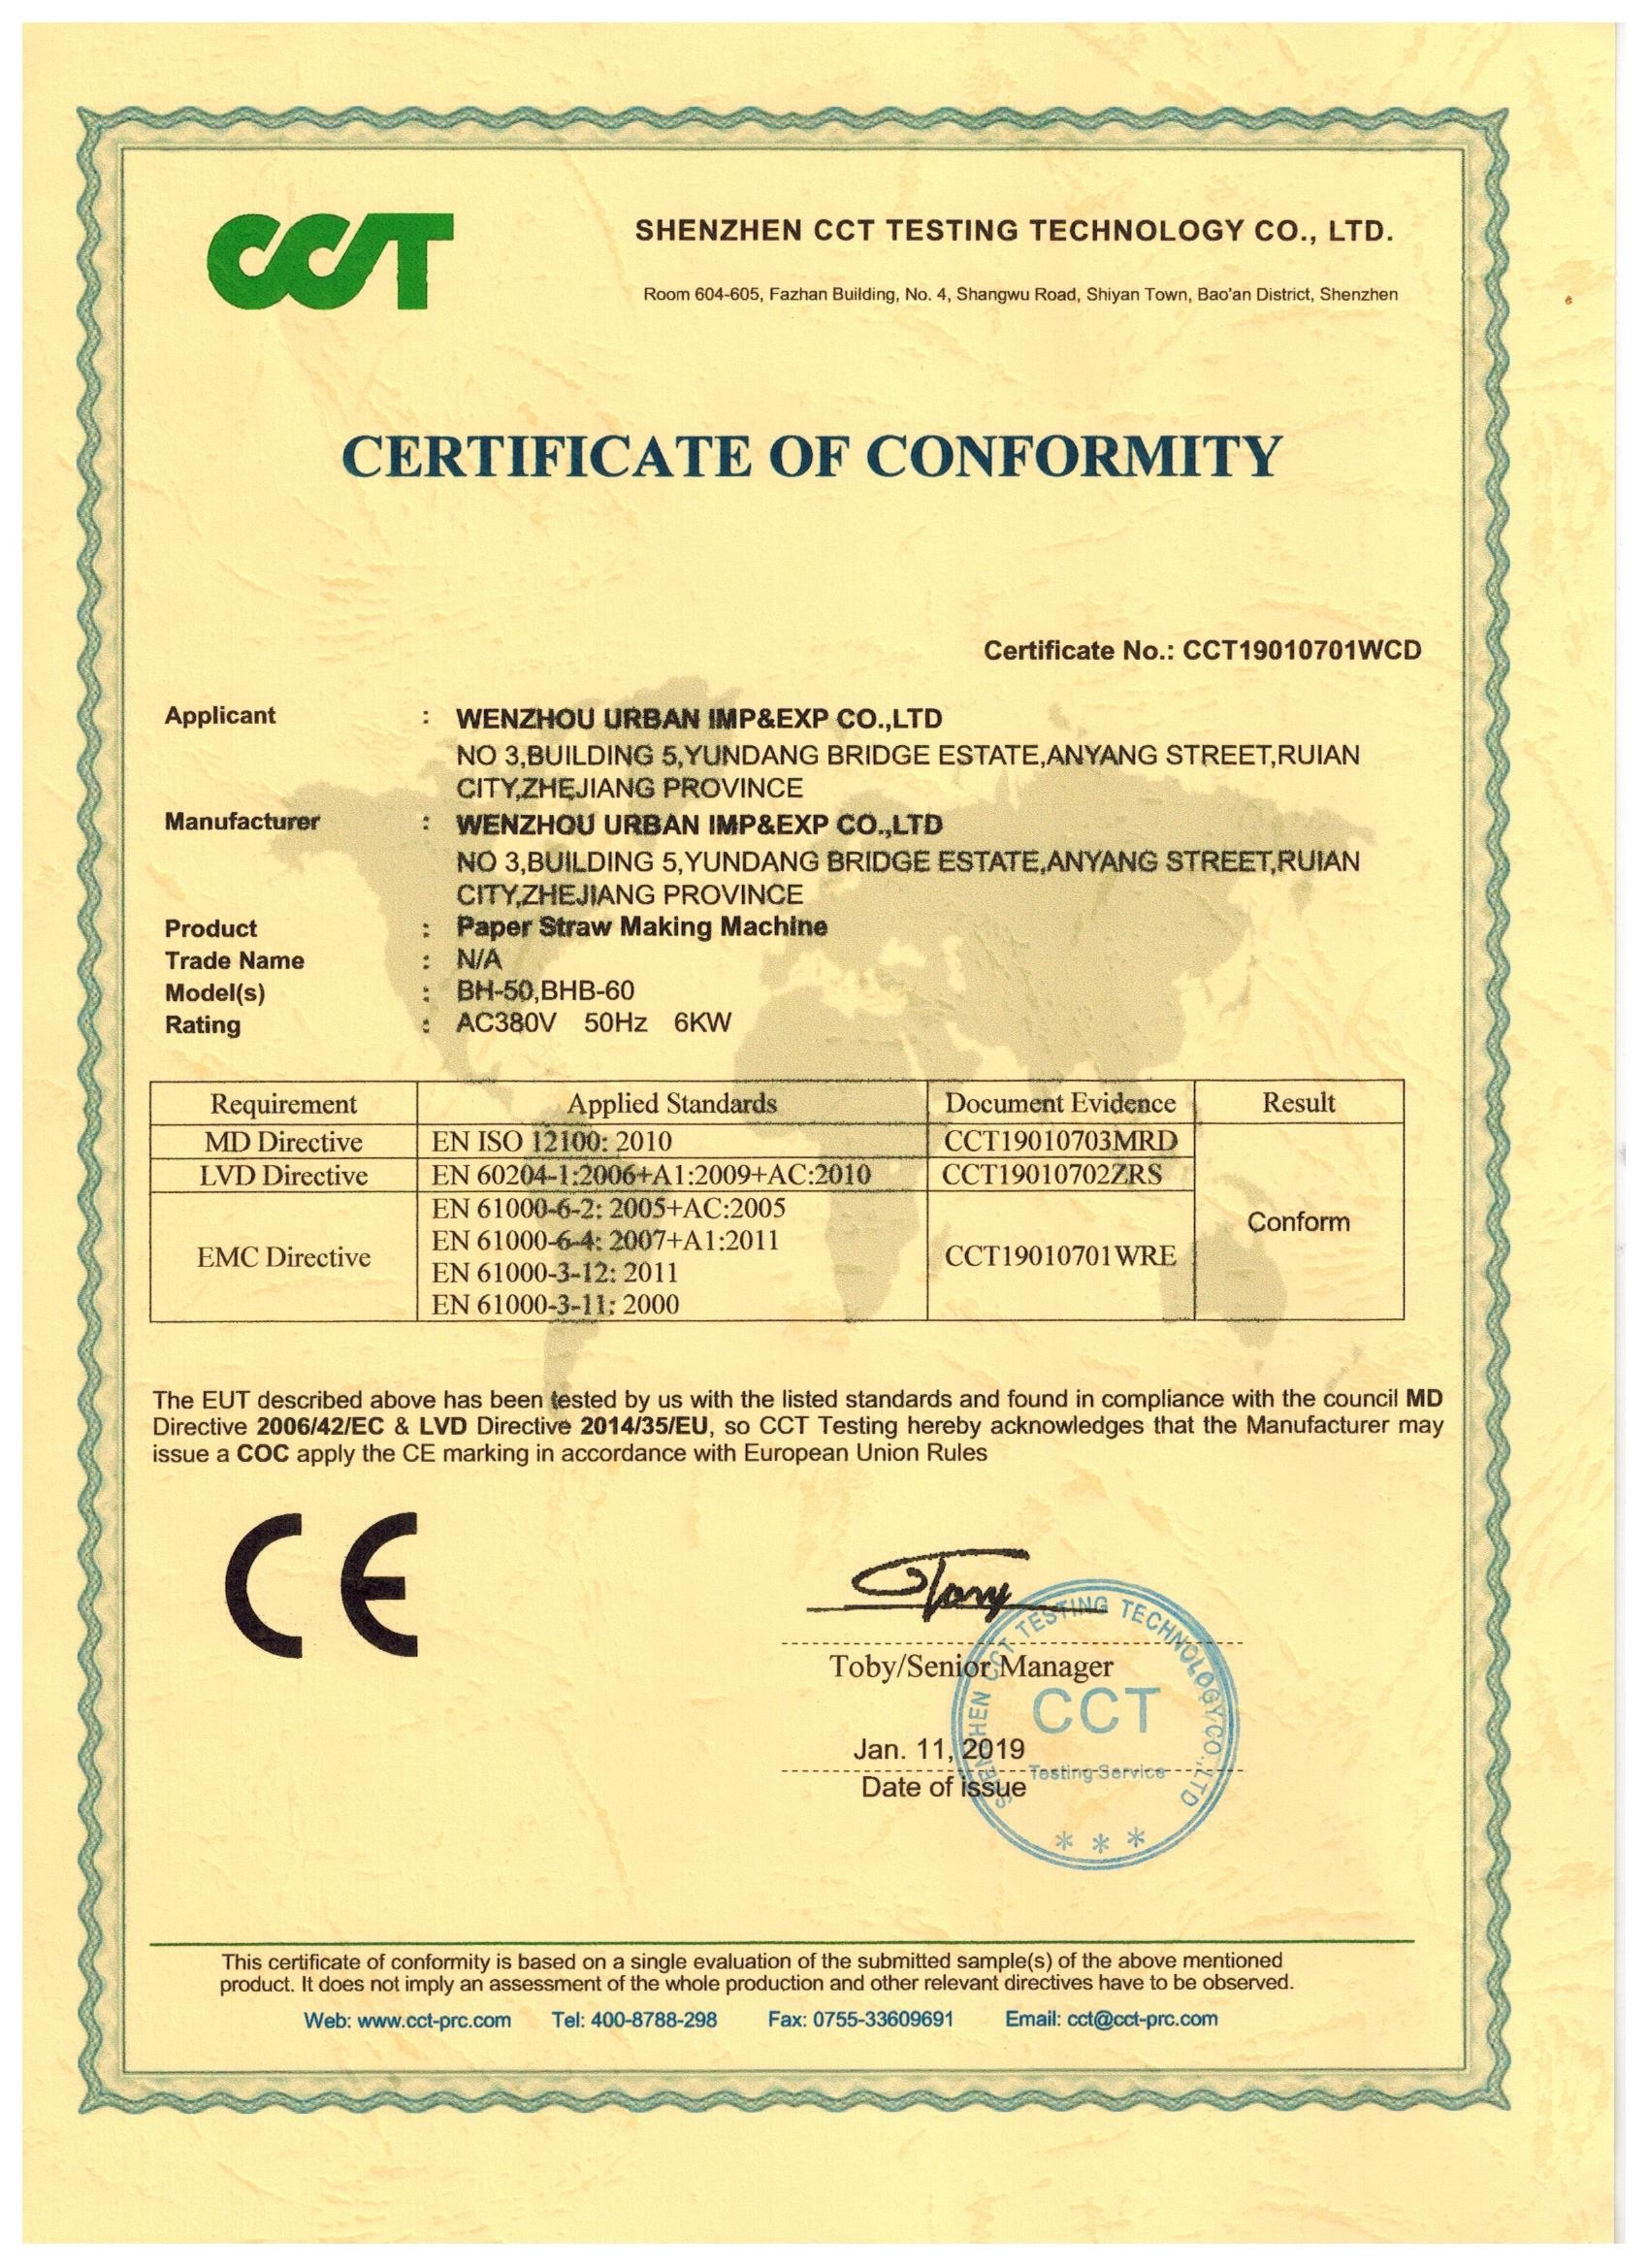 WENZHOU URBAN PACKLINE CO., LTD. Certifications